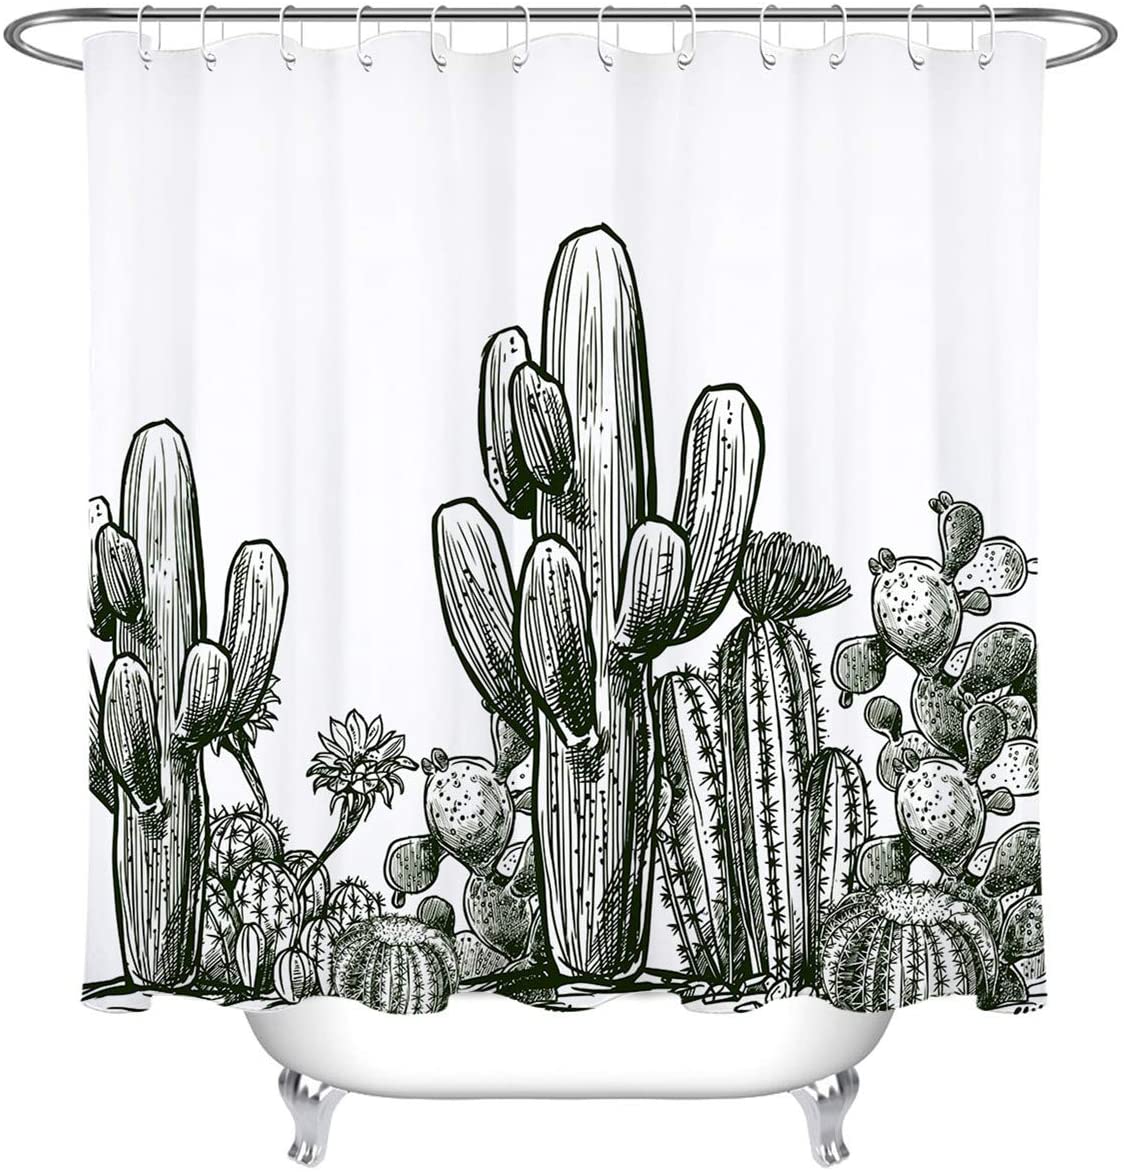 Mexican Black Whtie Desert Prickly Saguaro Succulent Western Cactus Shower Curtain